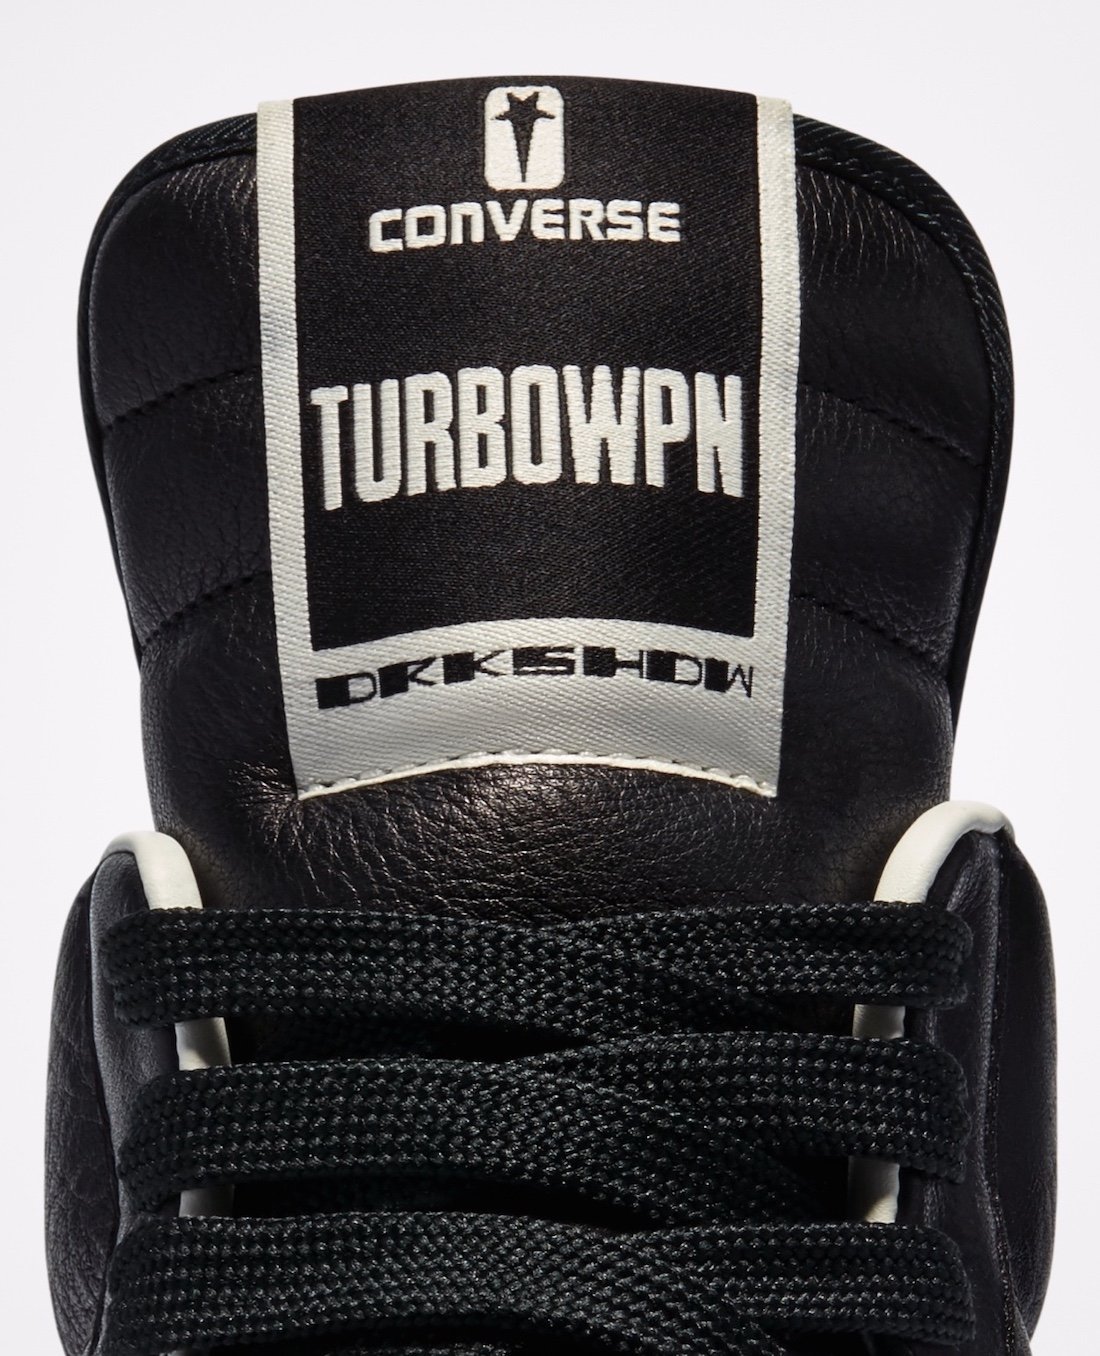 Rick Owens x Converse TURBOWPN Release Date Info